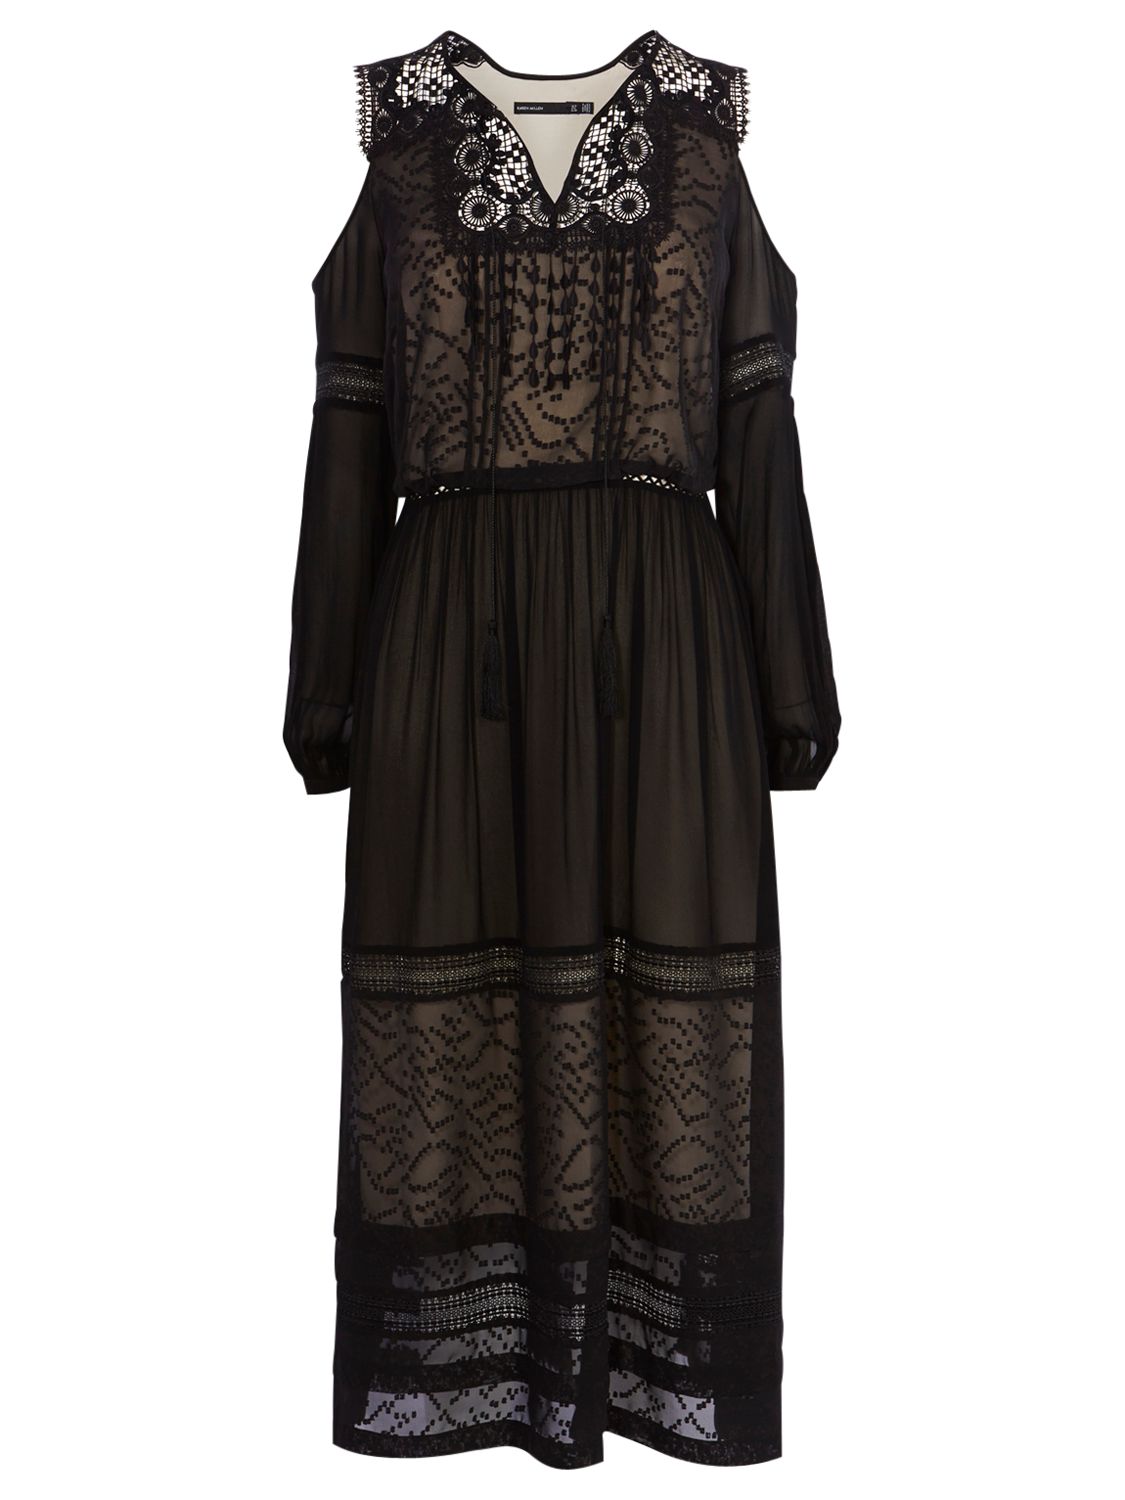 Karen Millen Bohemian Dress, Black